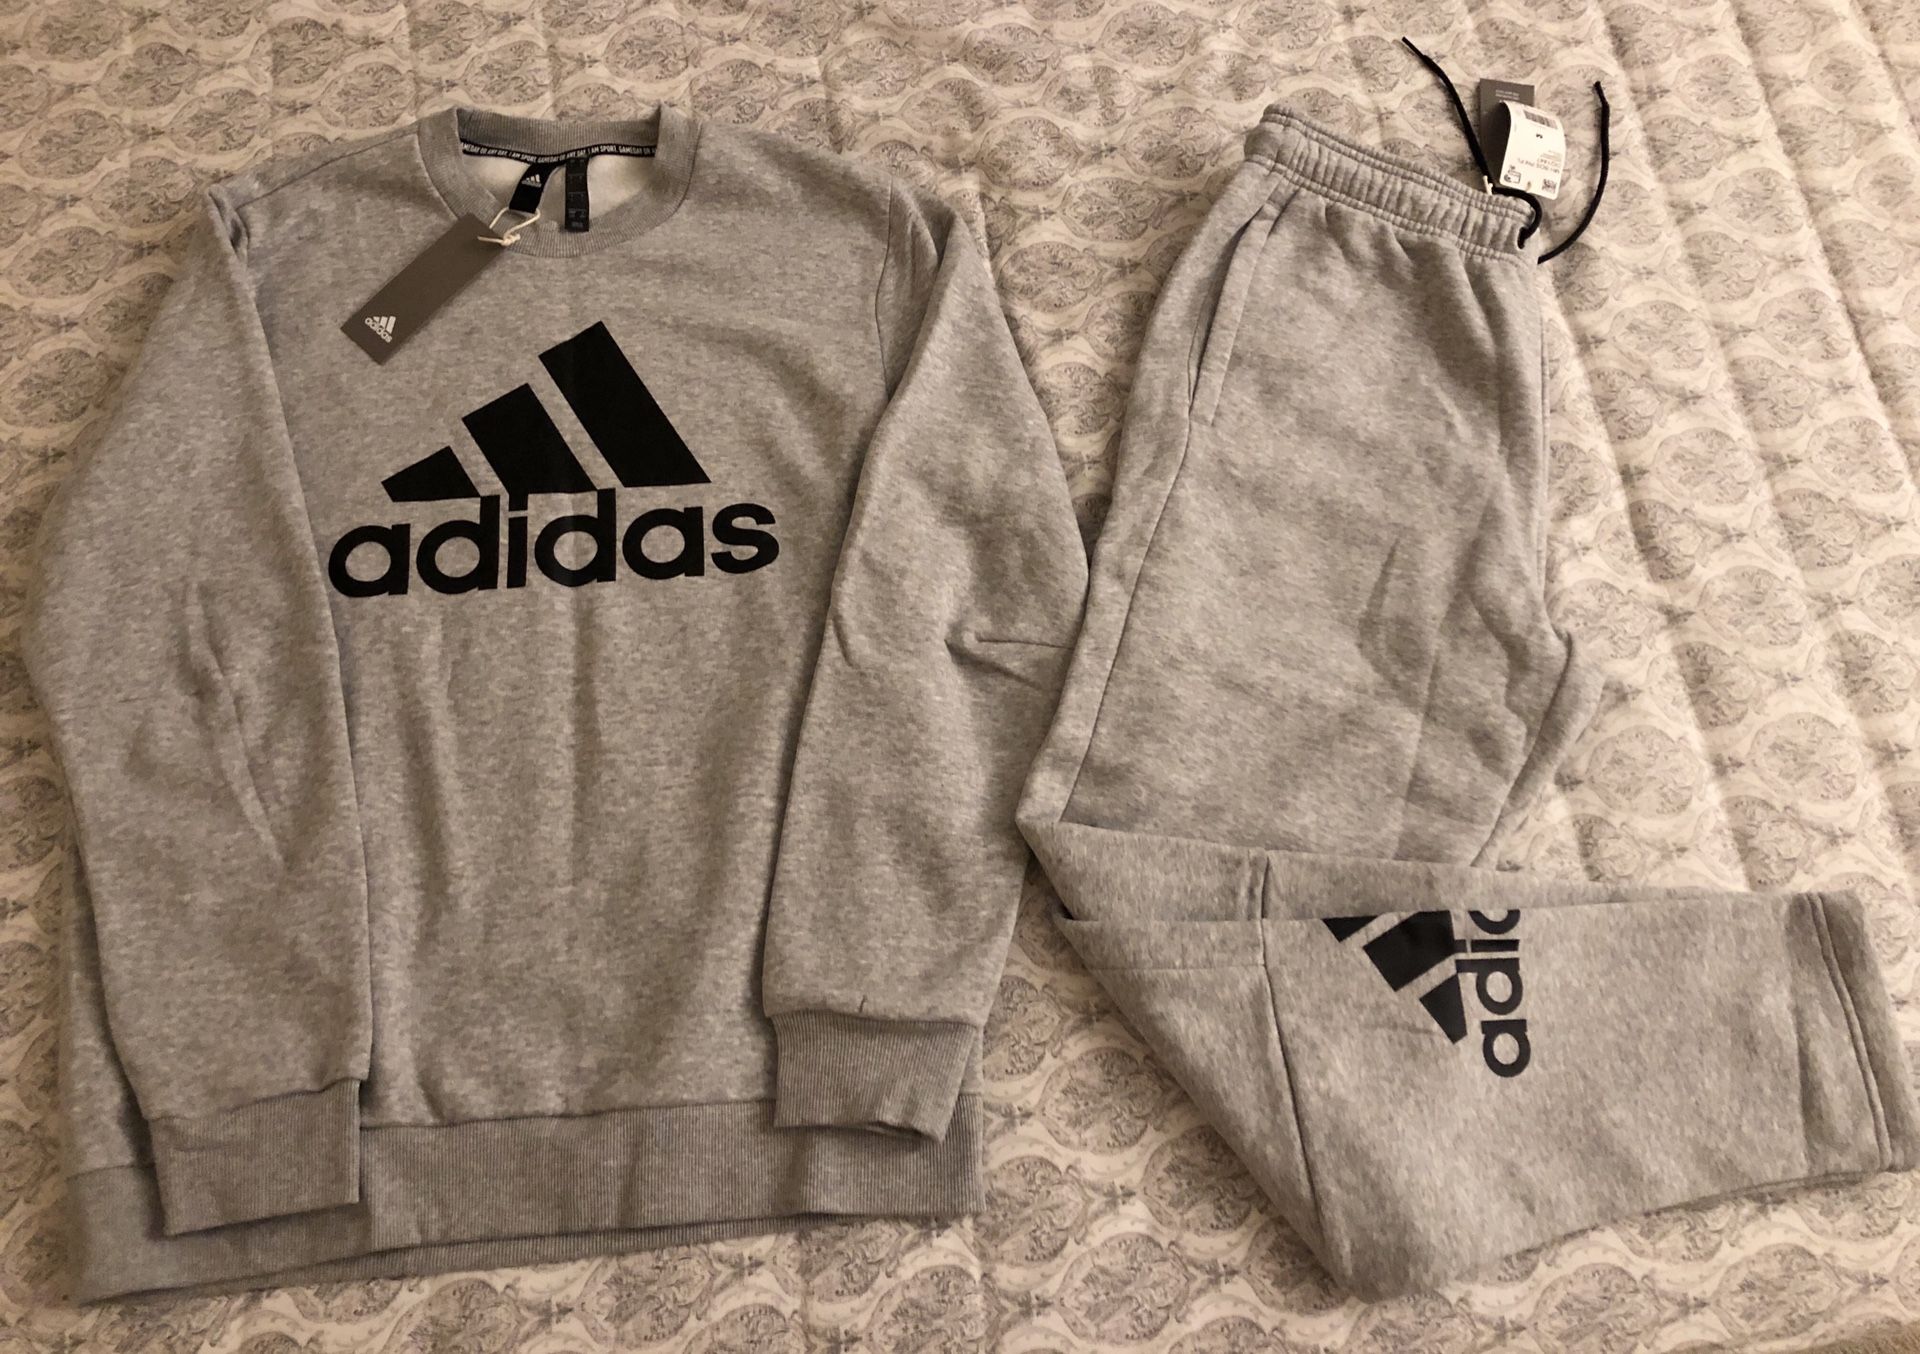 Adidas Tracksuit Set Size M Light Gray